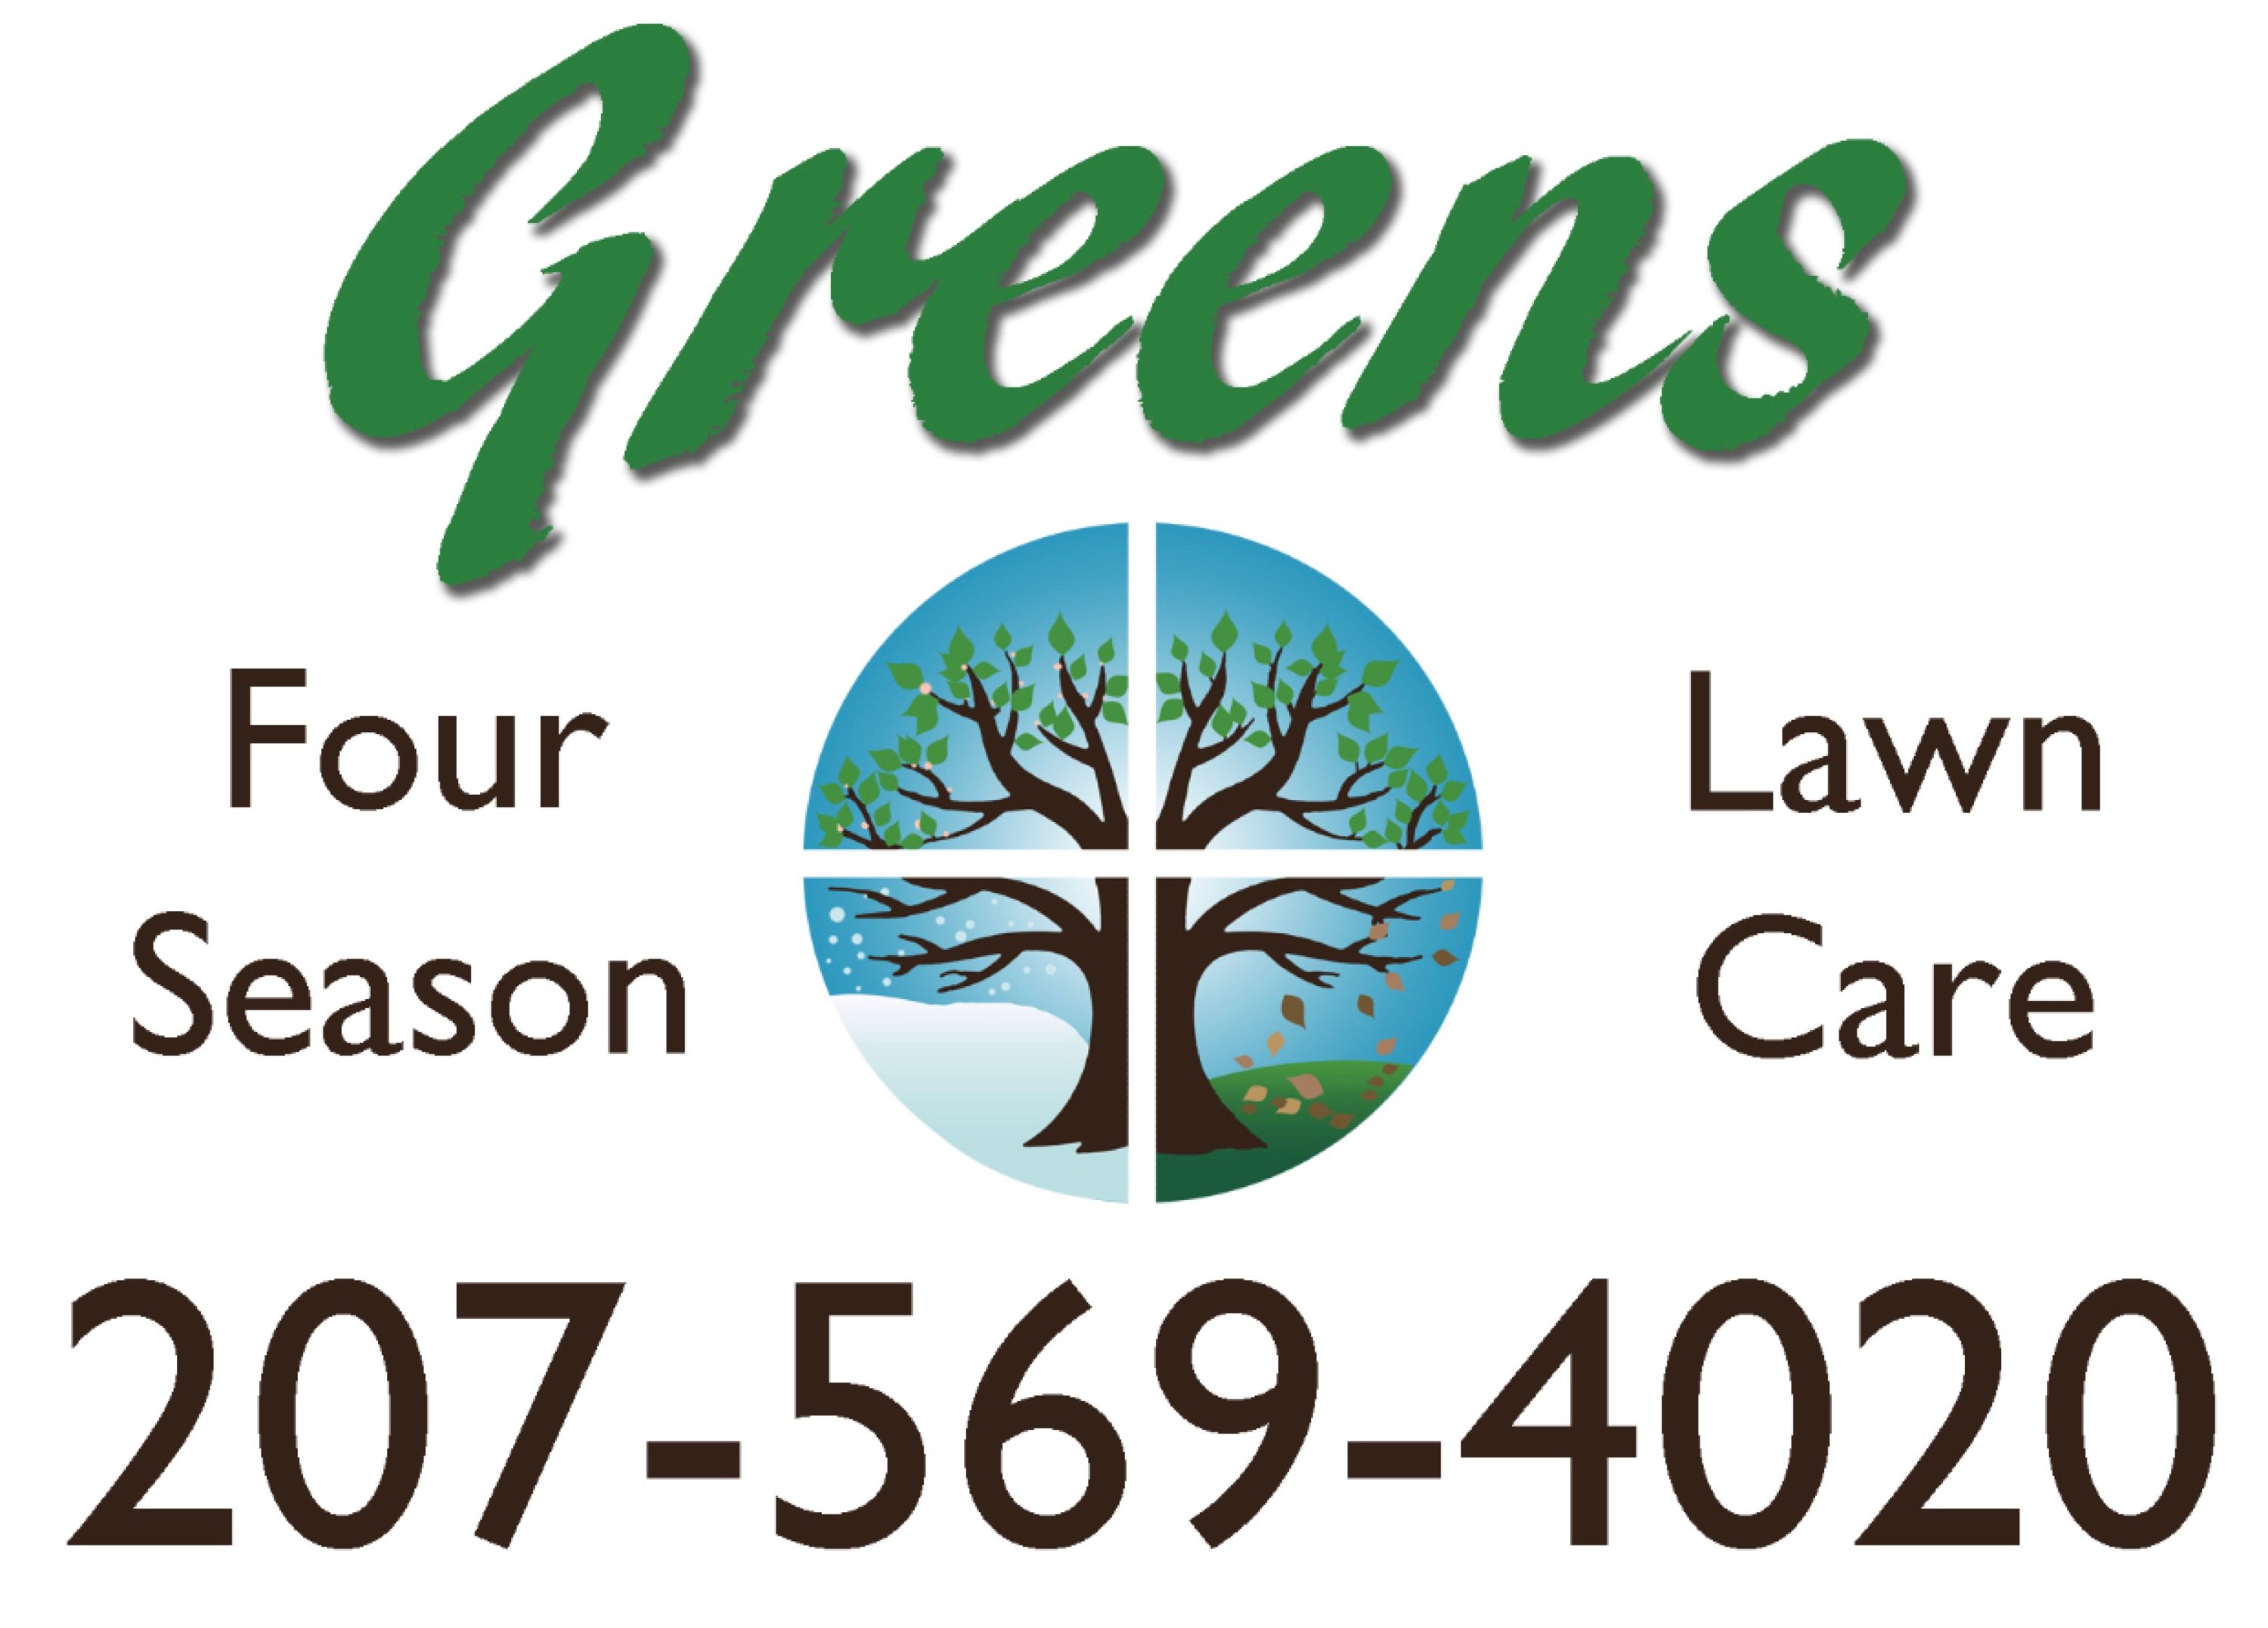 Green's Four Season Lawn Care Logo